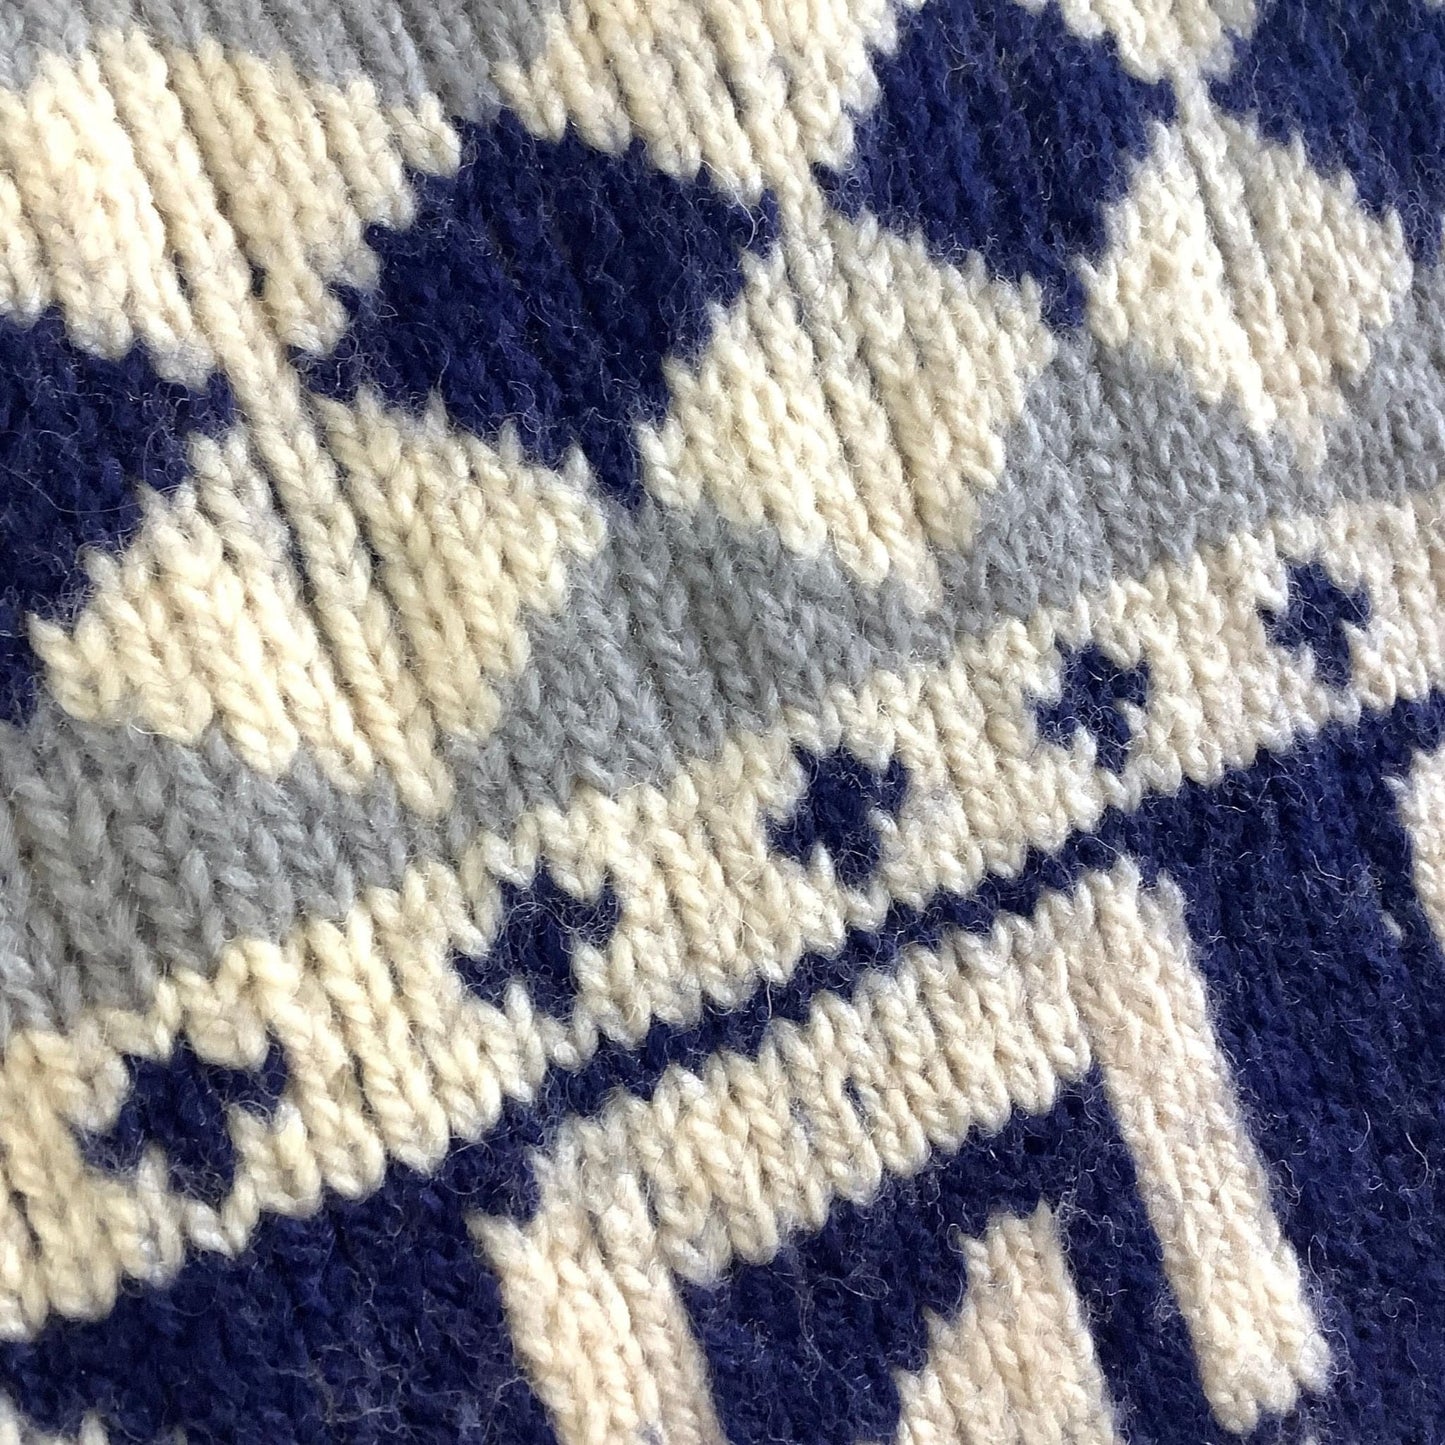 Geometric Wool Sweater Small / Multi / Vintage 1980s